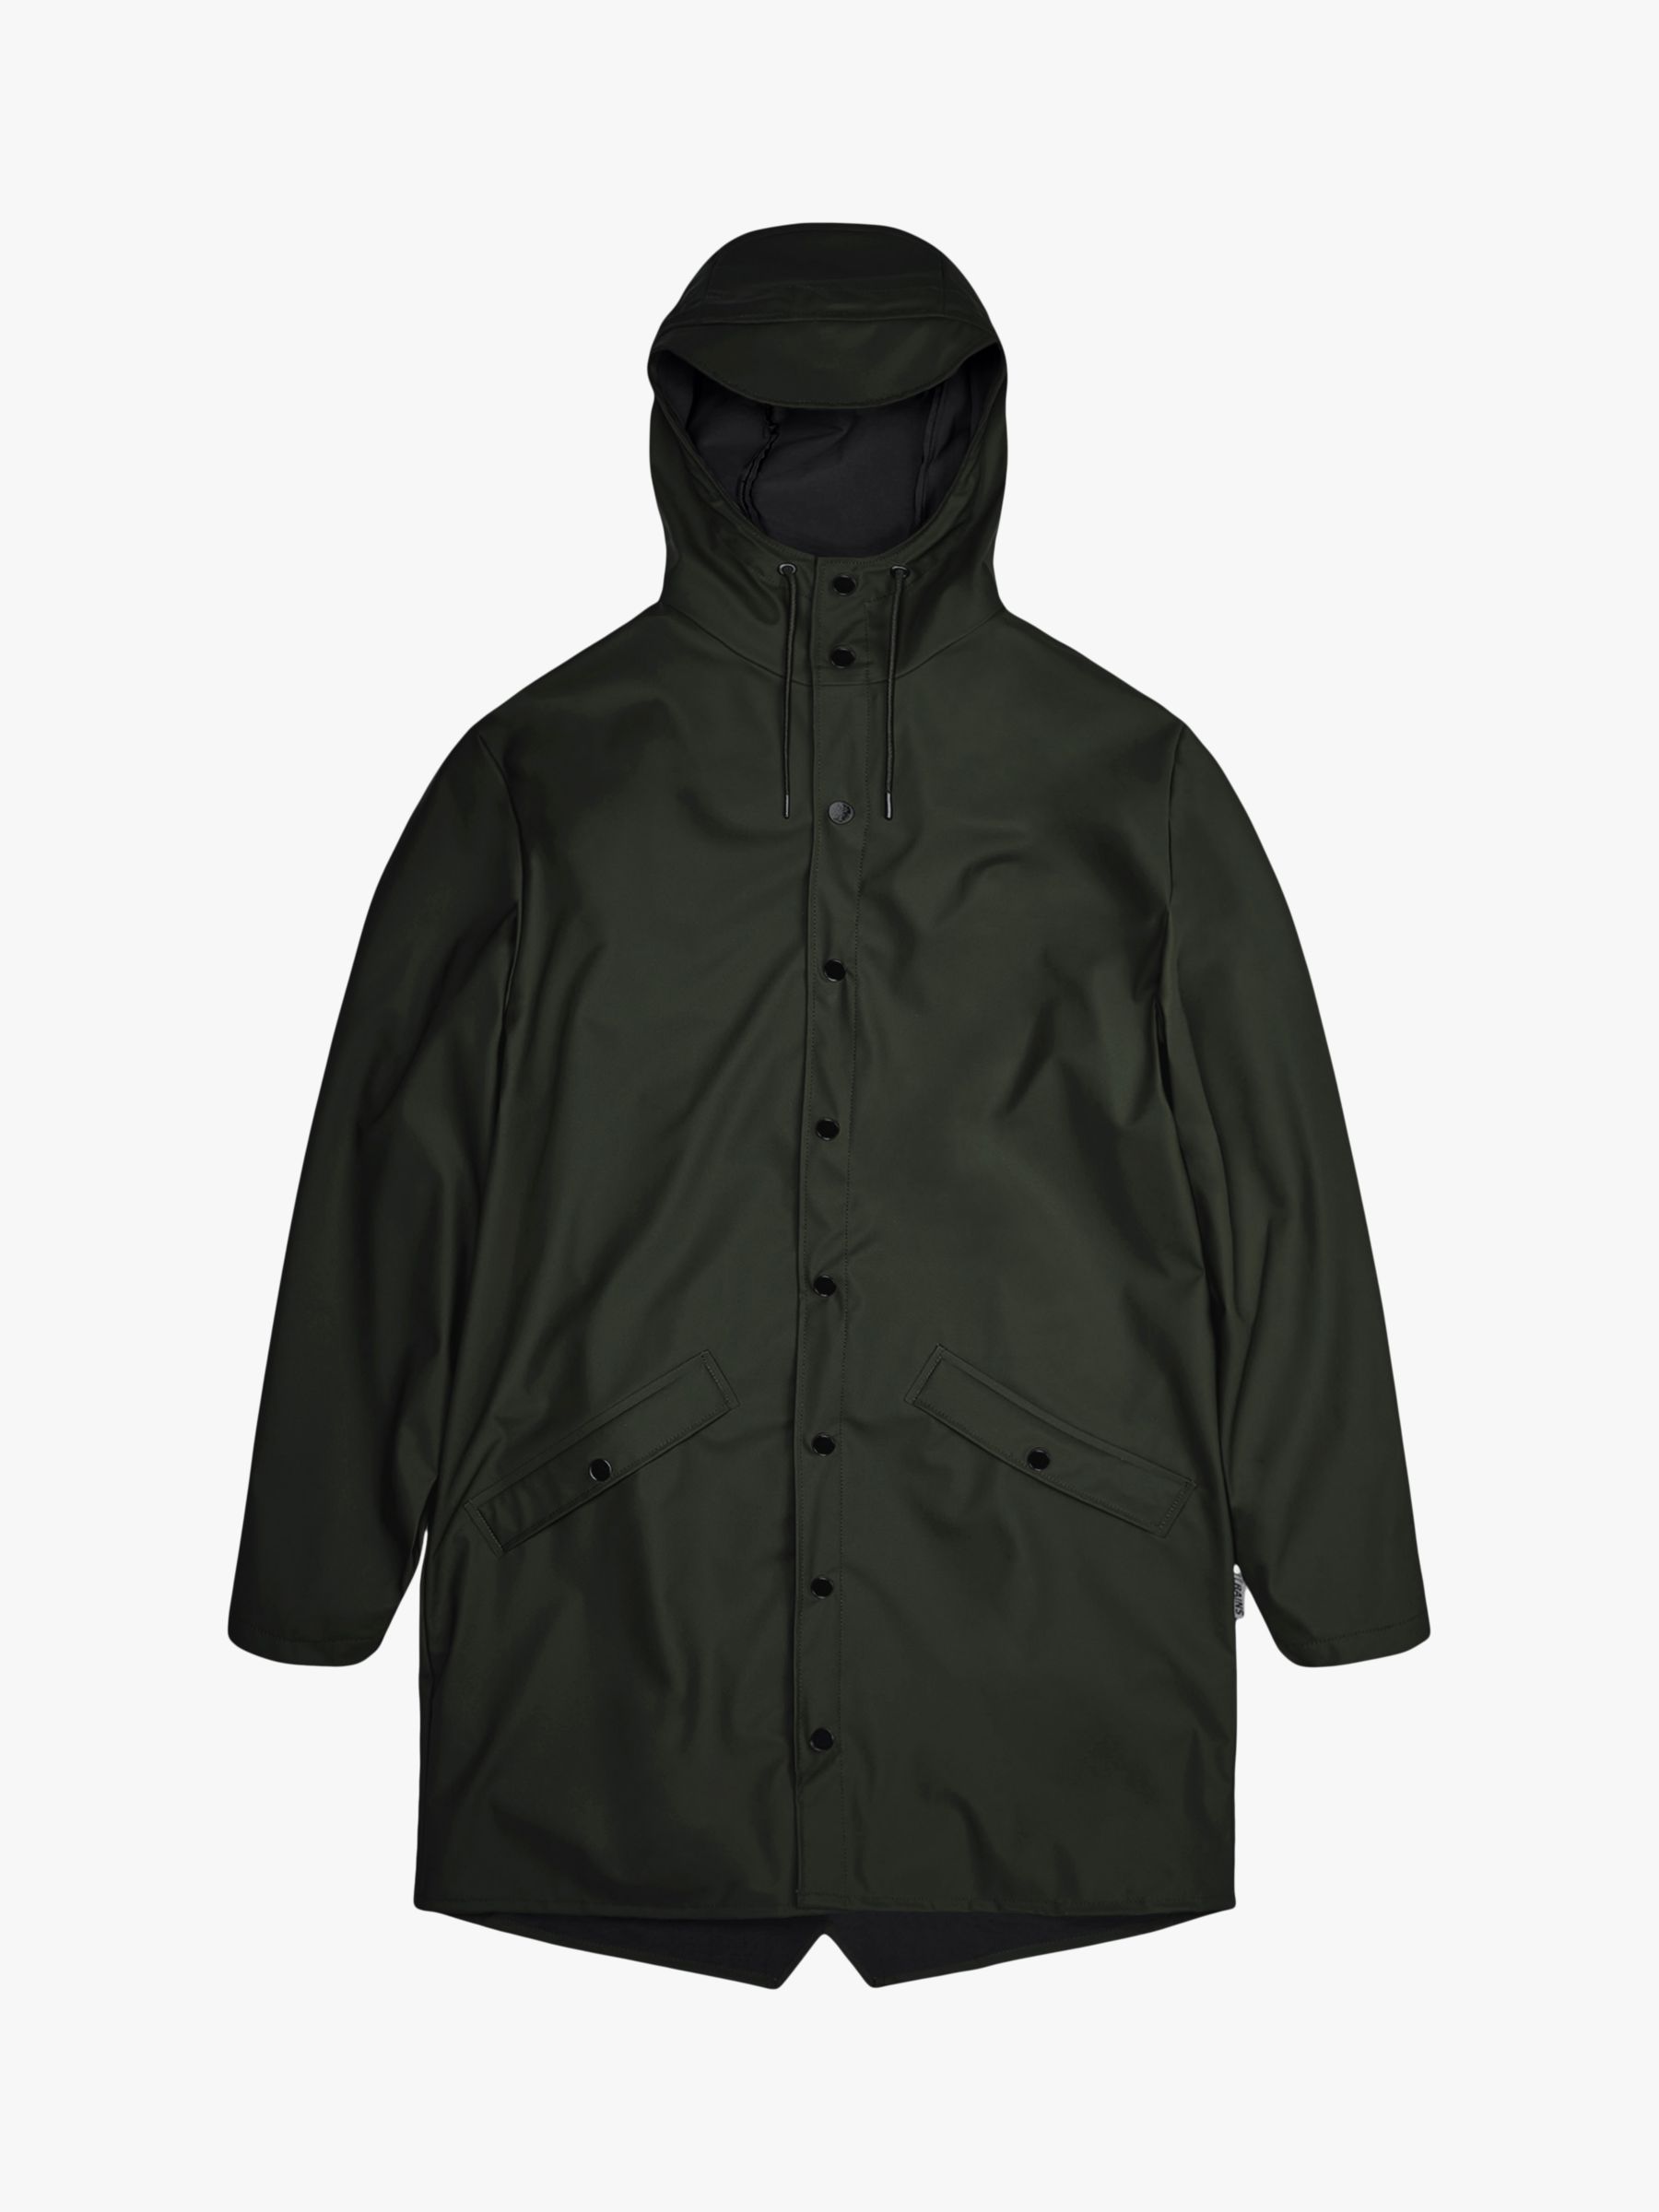 Rains Unisex Waterproof Long Rain Jacket, 03 Green at John Lewis & Partners